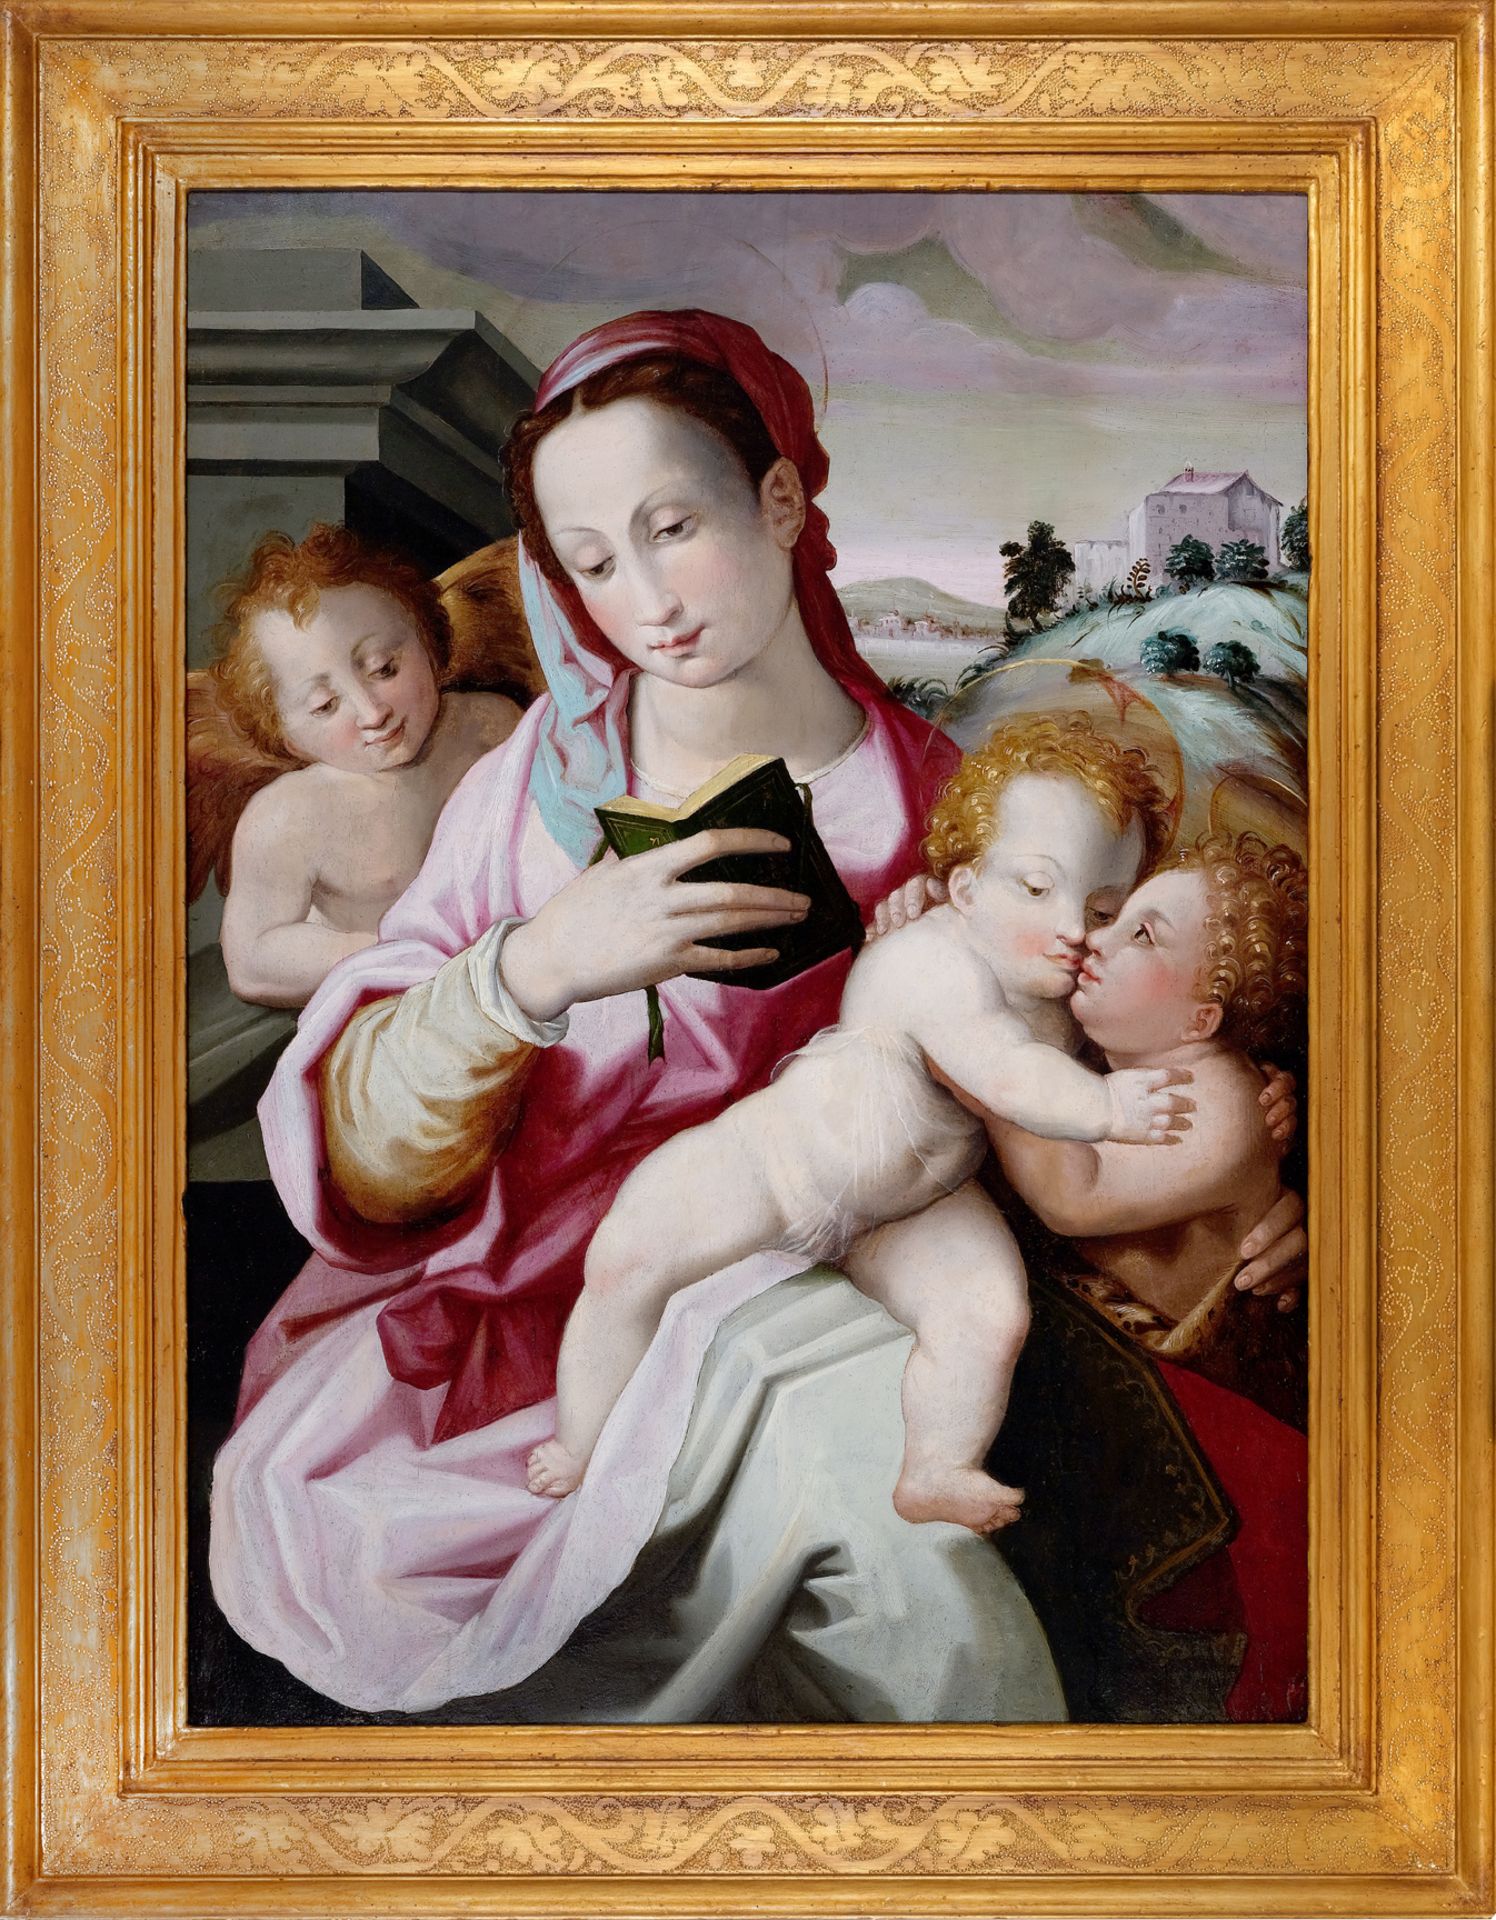 Michele Tosini, detto MICHELE RIDOLFO GHIRLANDAIO, Tuscany 1503 - 1577 Florenz